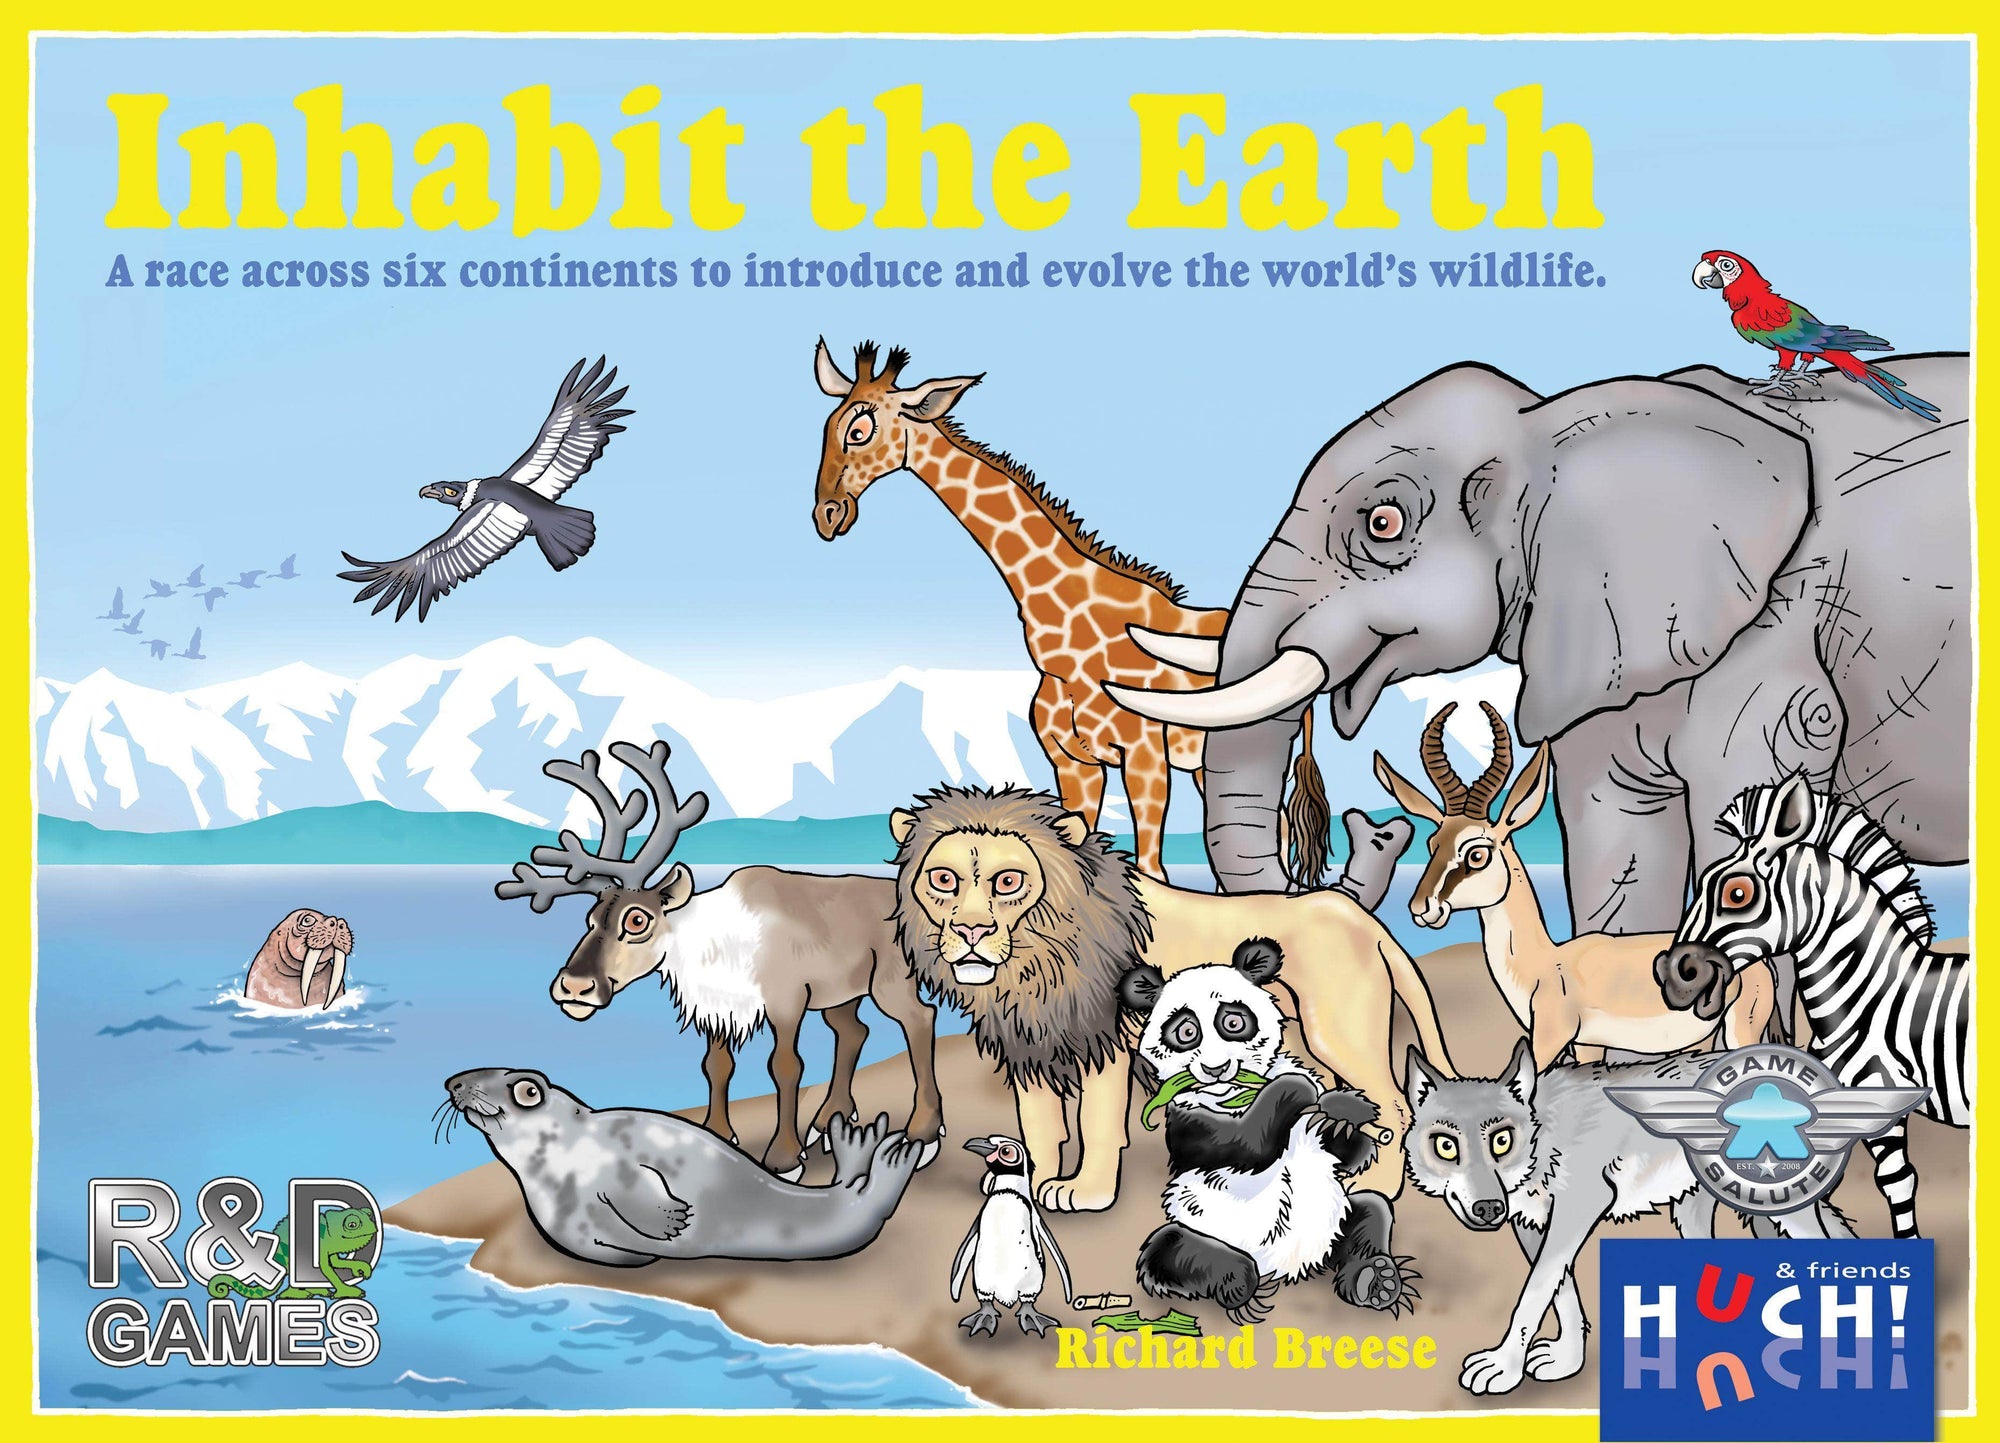 Habitar el juego de mesa de Kickstarter de la Tierra (Kickstarter) R&D Games KS800175A